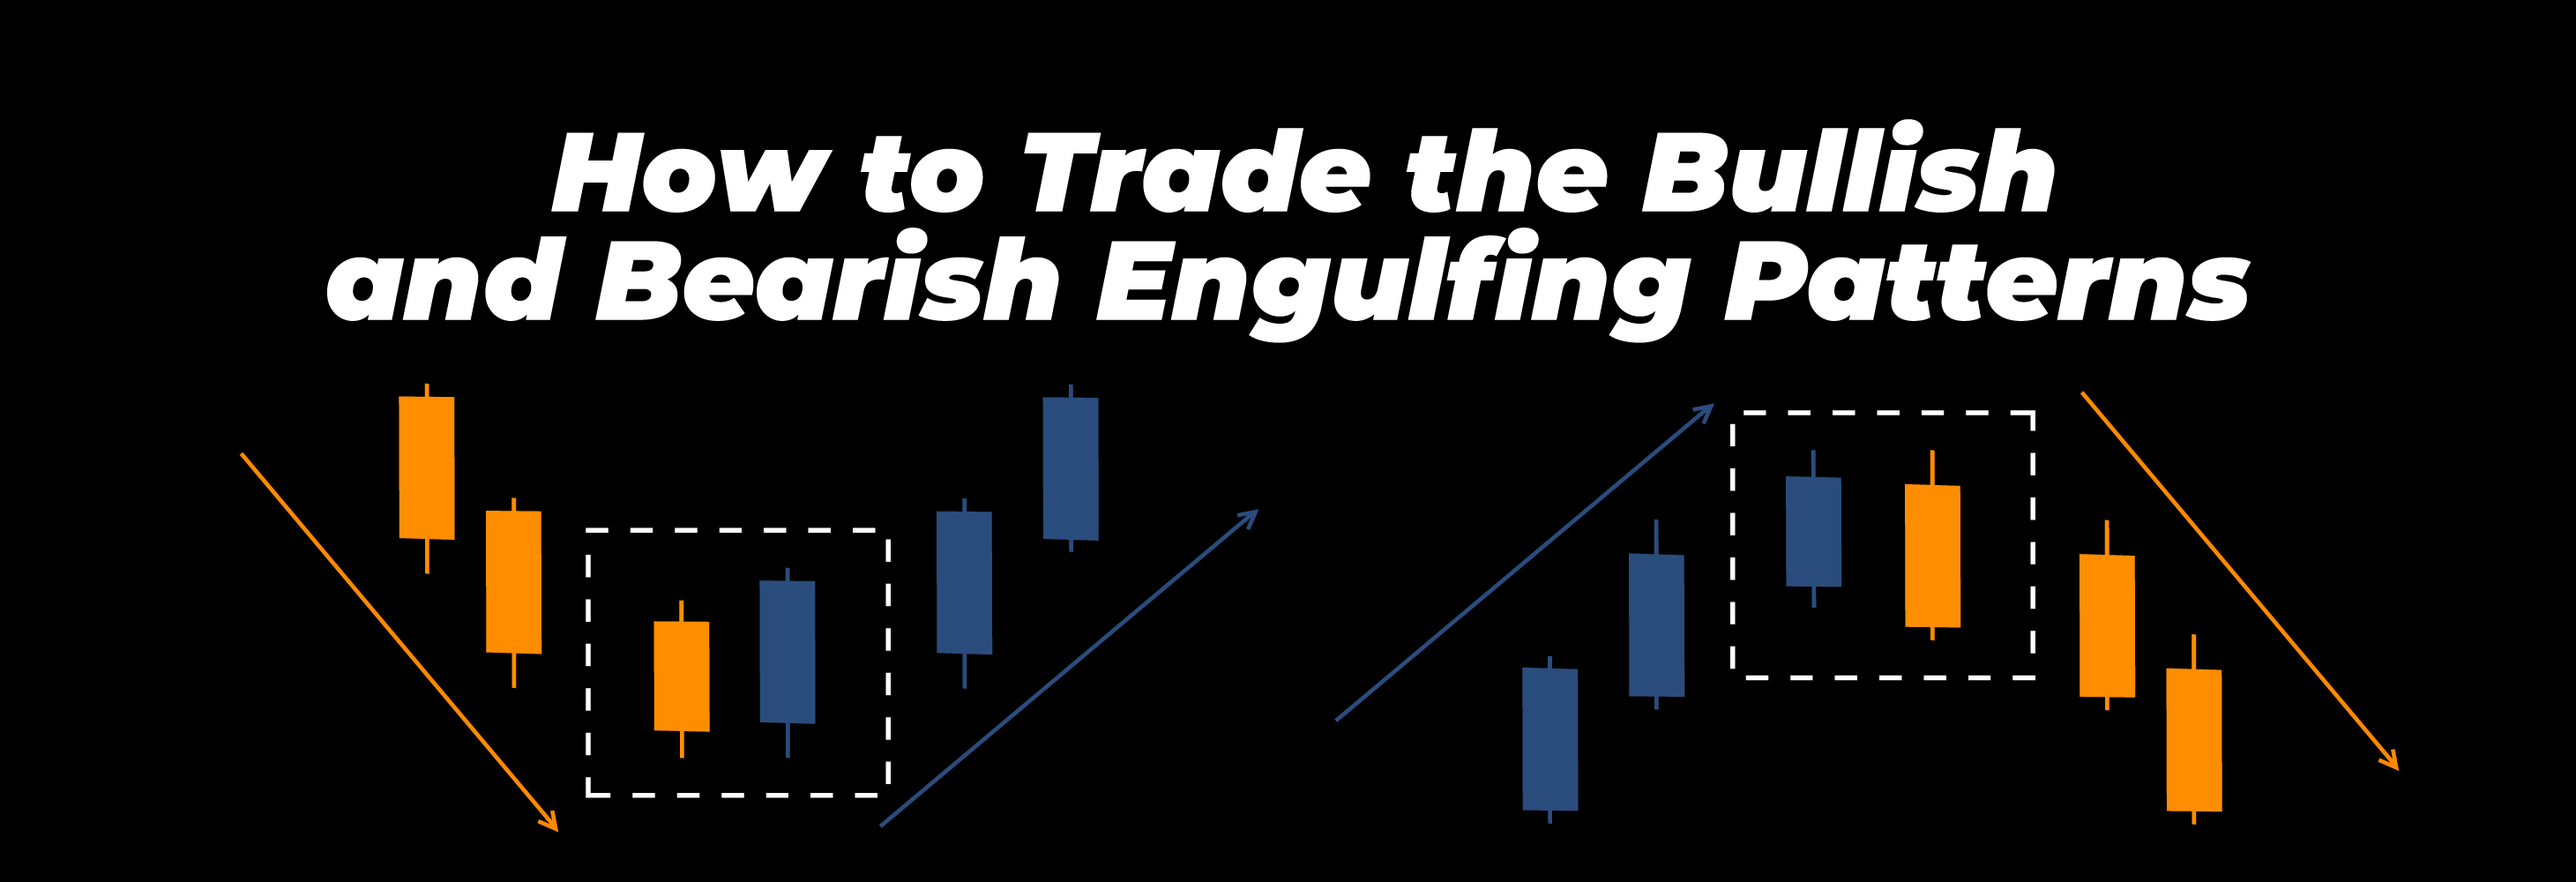 How to Trade the Bullish and Bearish Engulfing Patterns